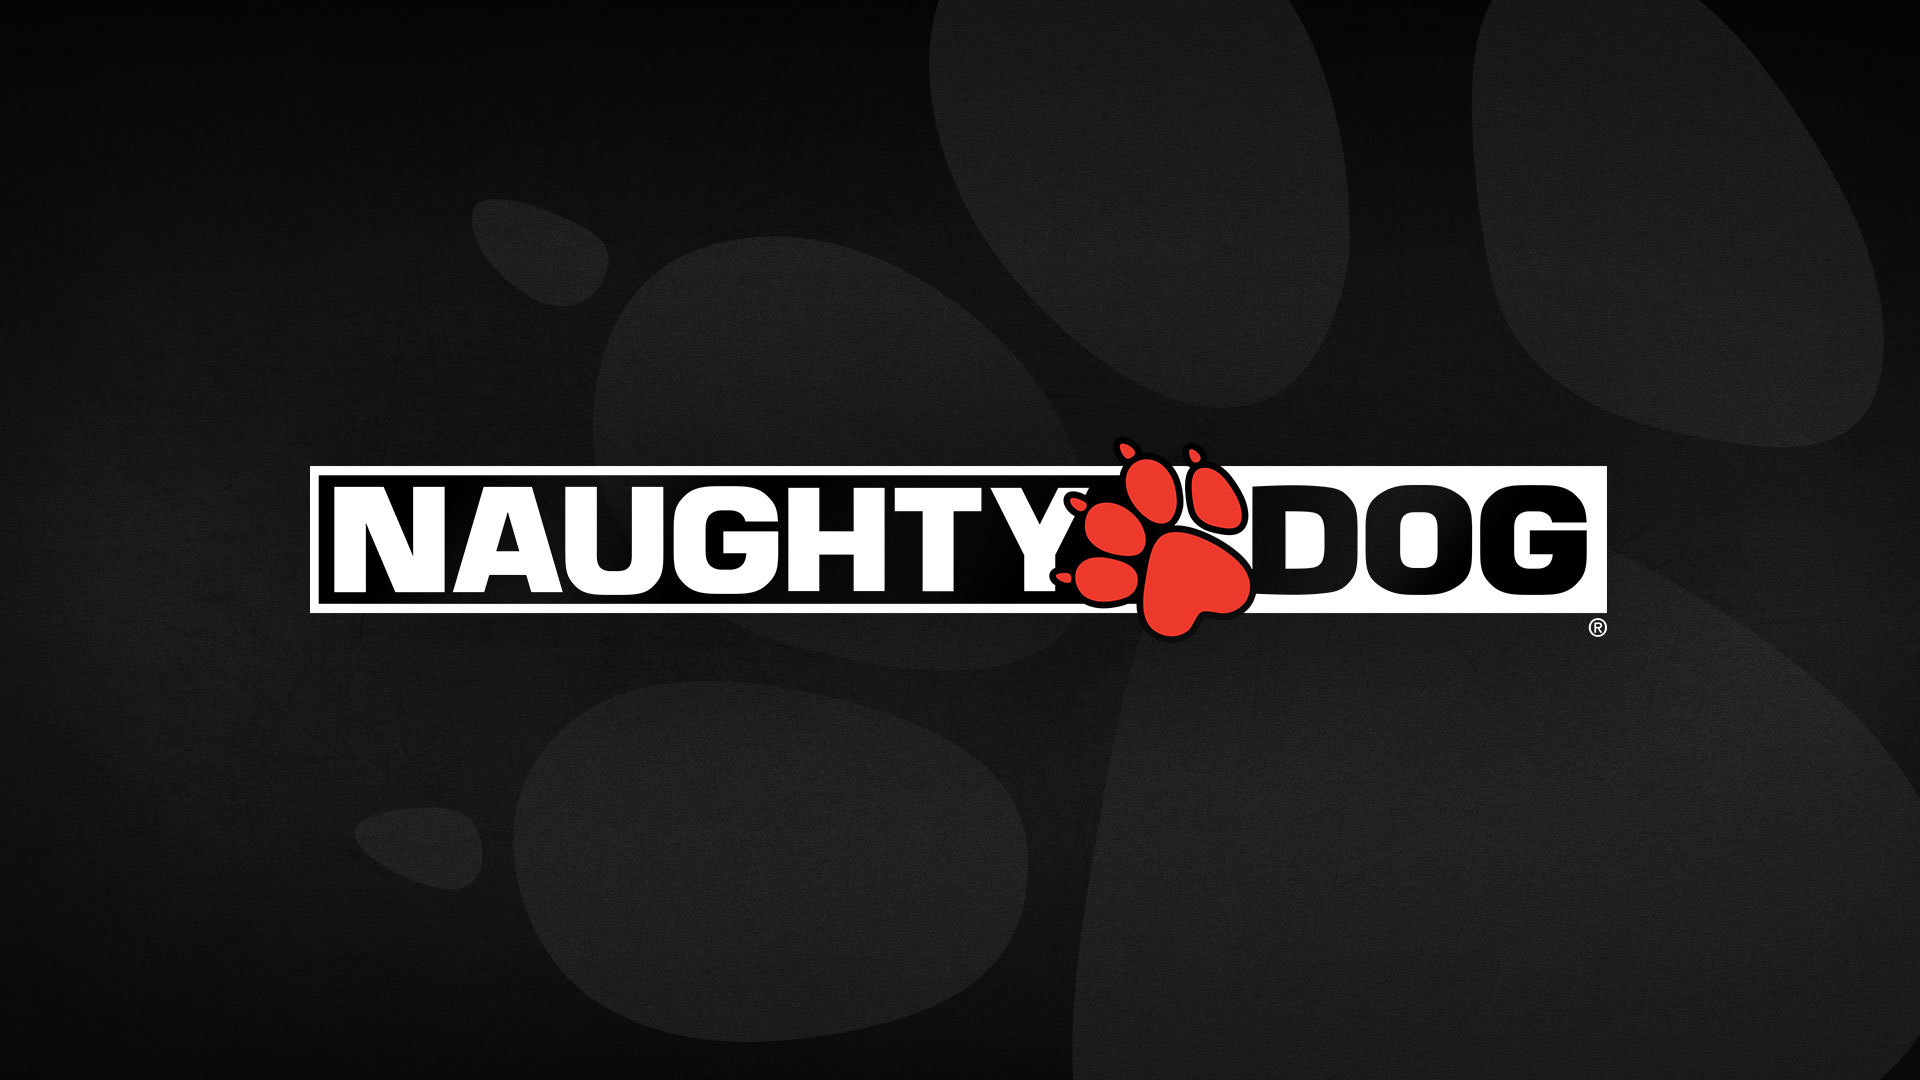 Neil Druckmann ยืนยัน มี “เกมหลายเกม” กำลังถูกดำเนินการอยู่ที่ Naughty Dog